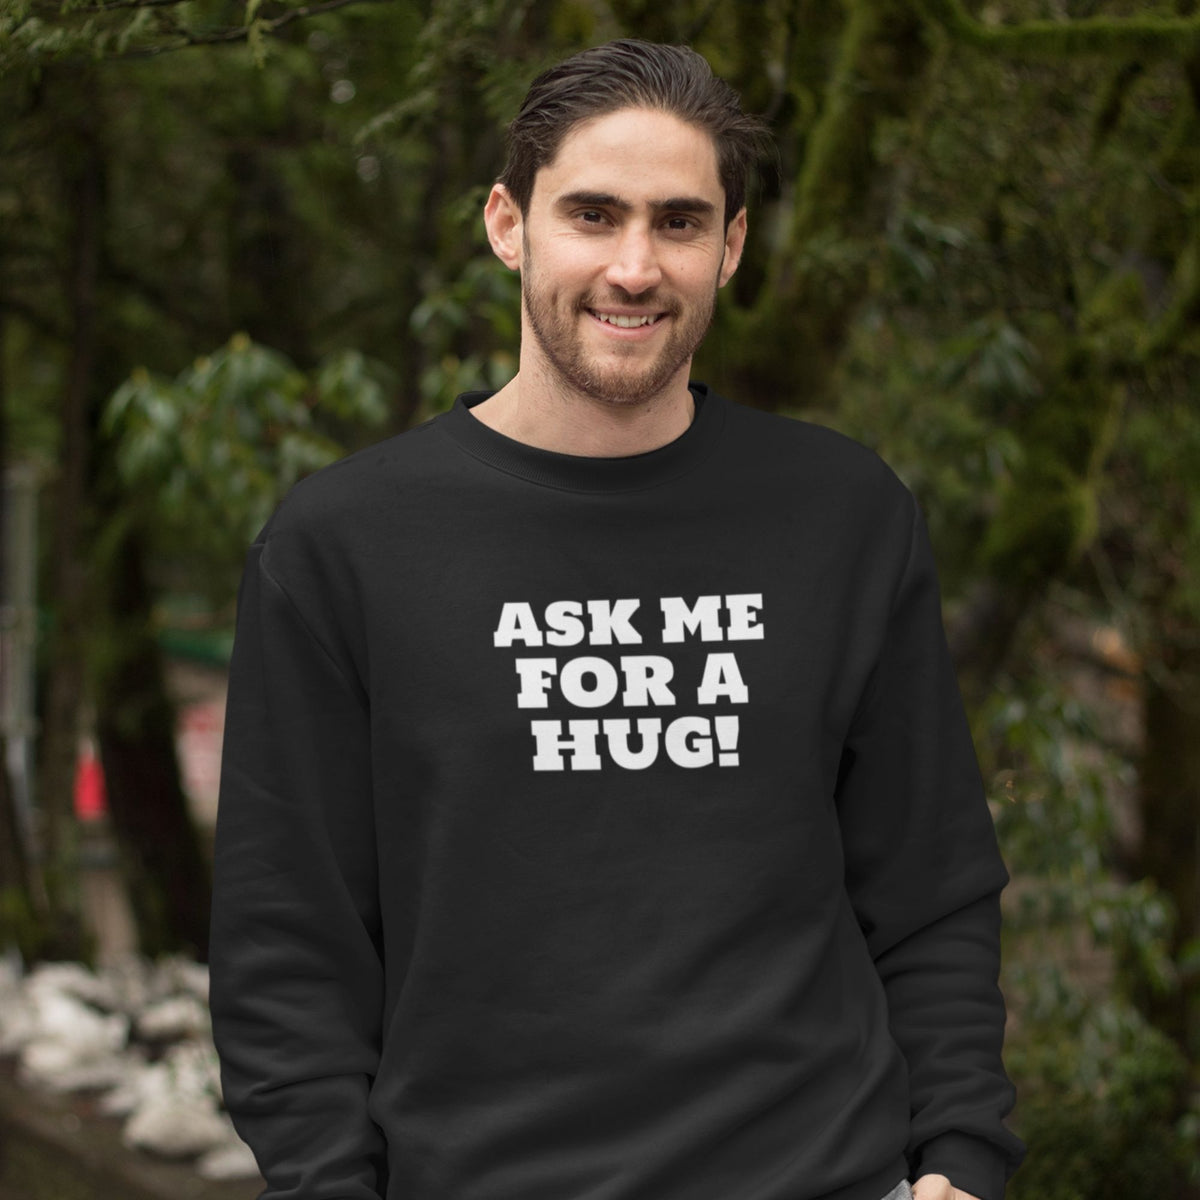 ask-me-for-a-hug-cotton-printed-unisex-black-men-model-sweatshirt-gogirgit-com